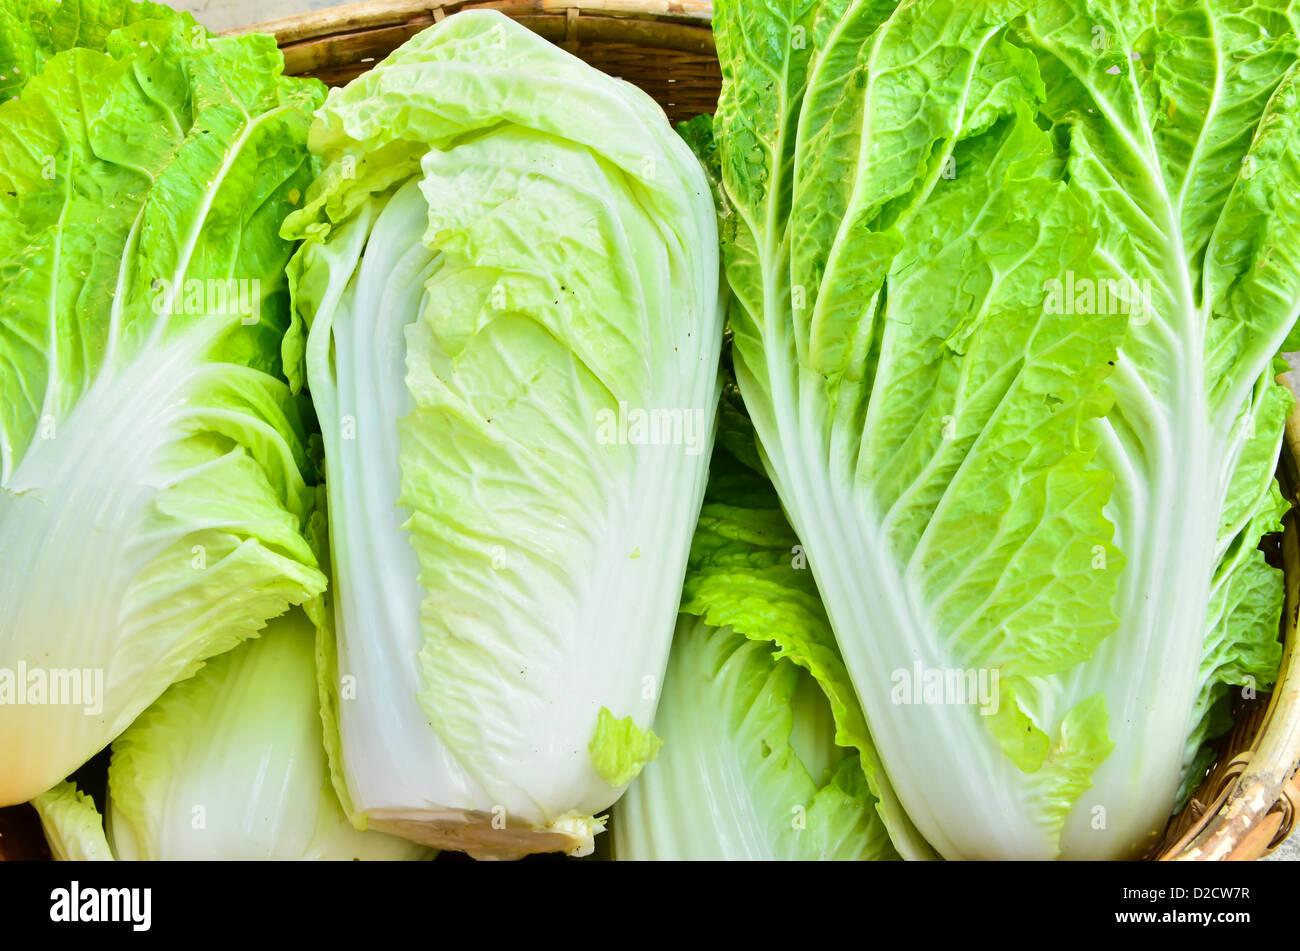 A head of romaine lettuce Stock Photo